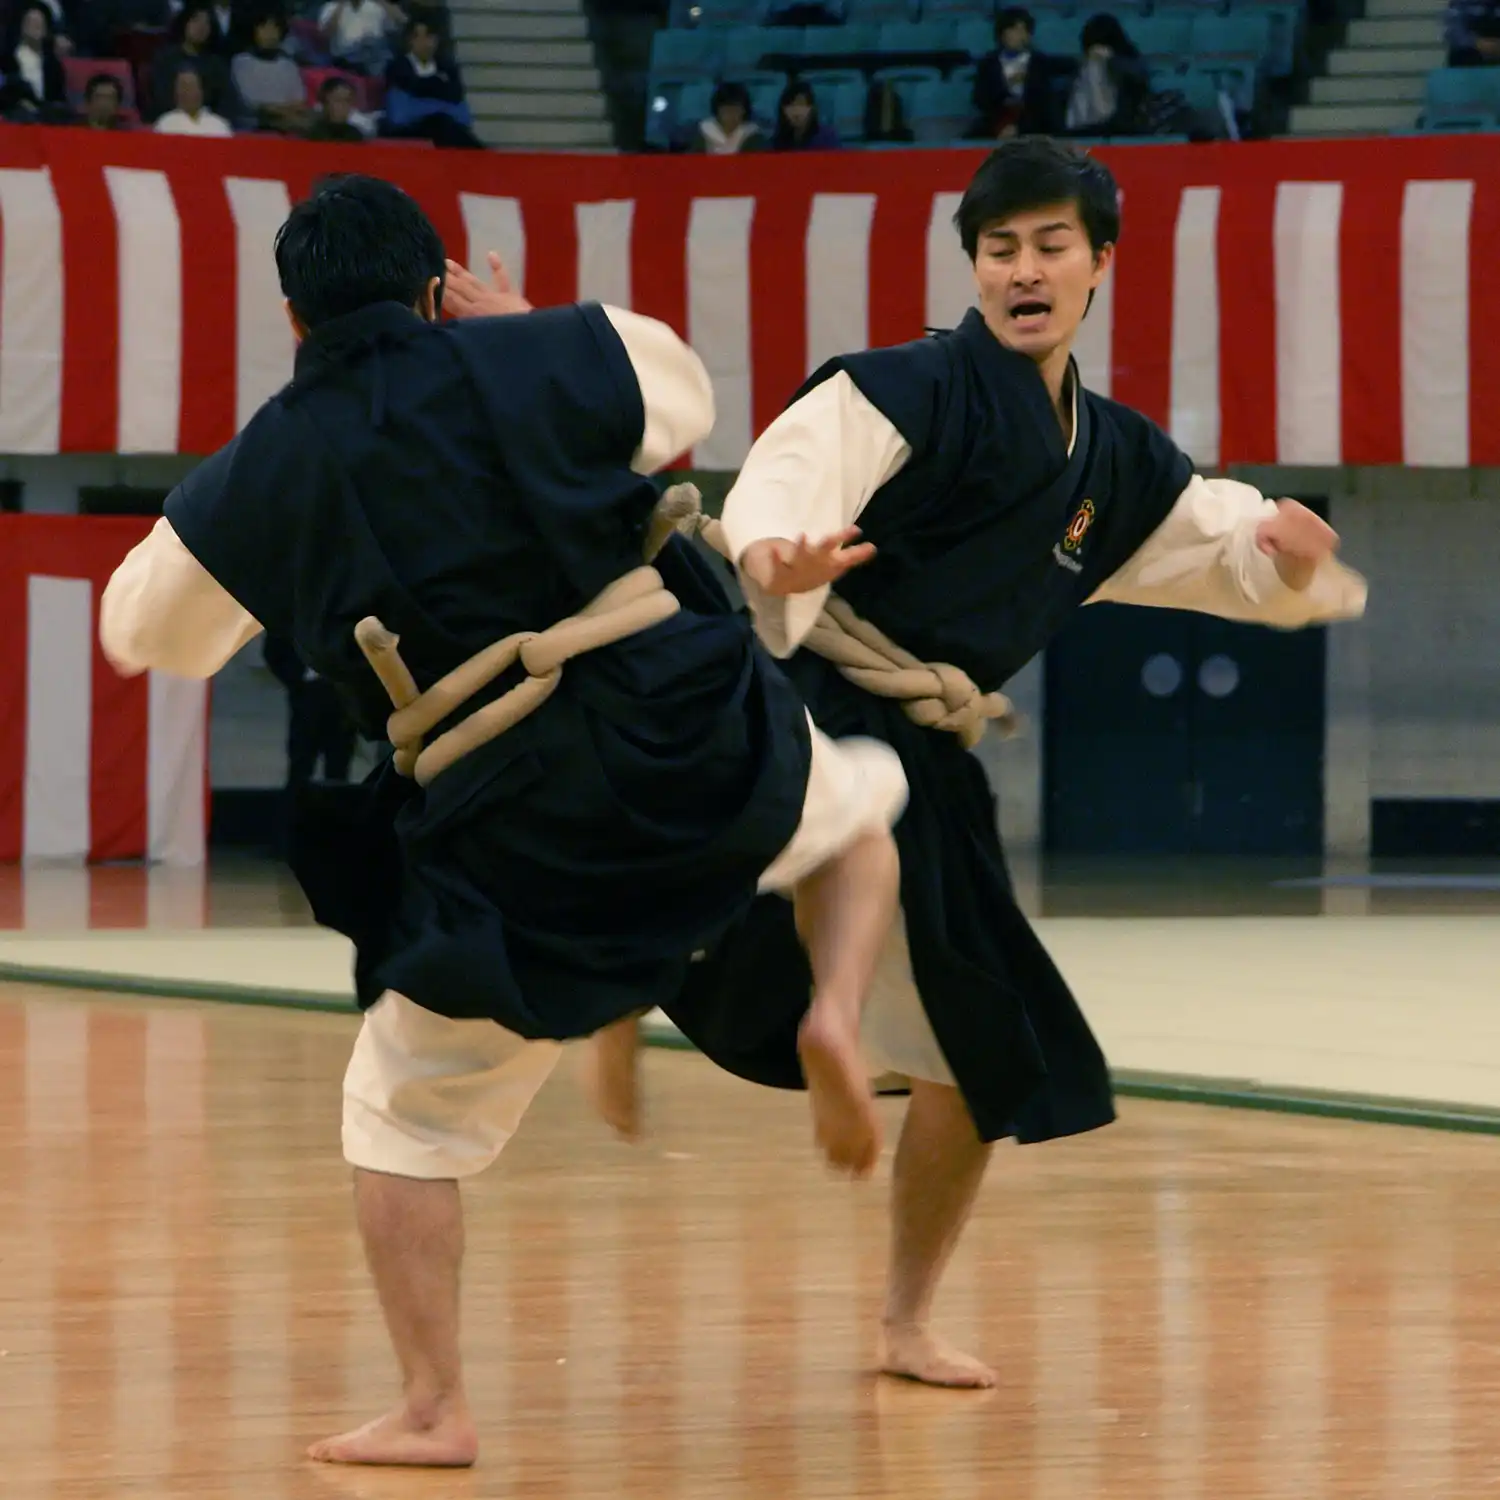 Shorinji Kempo martial art